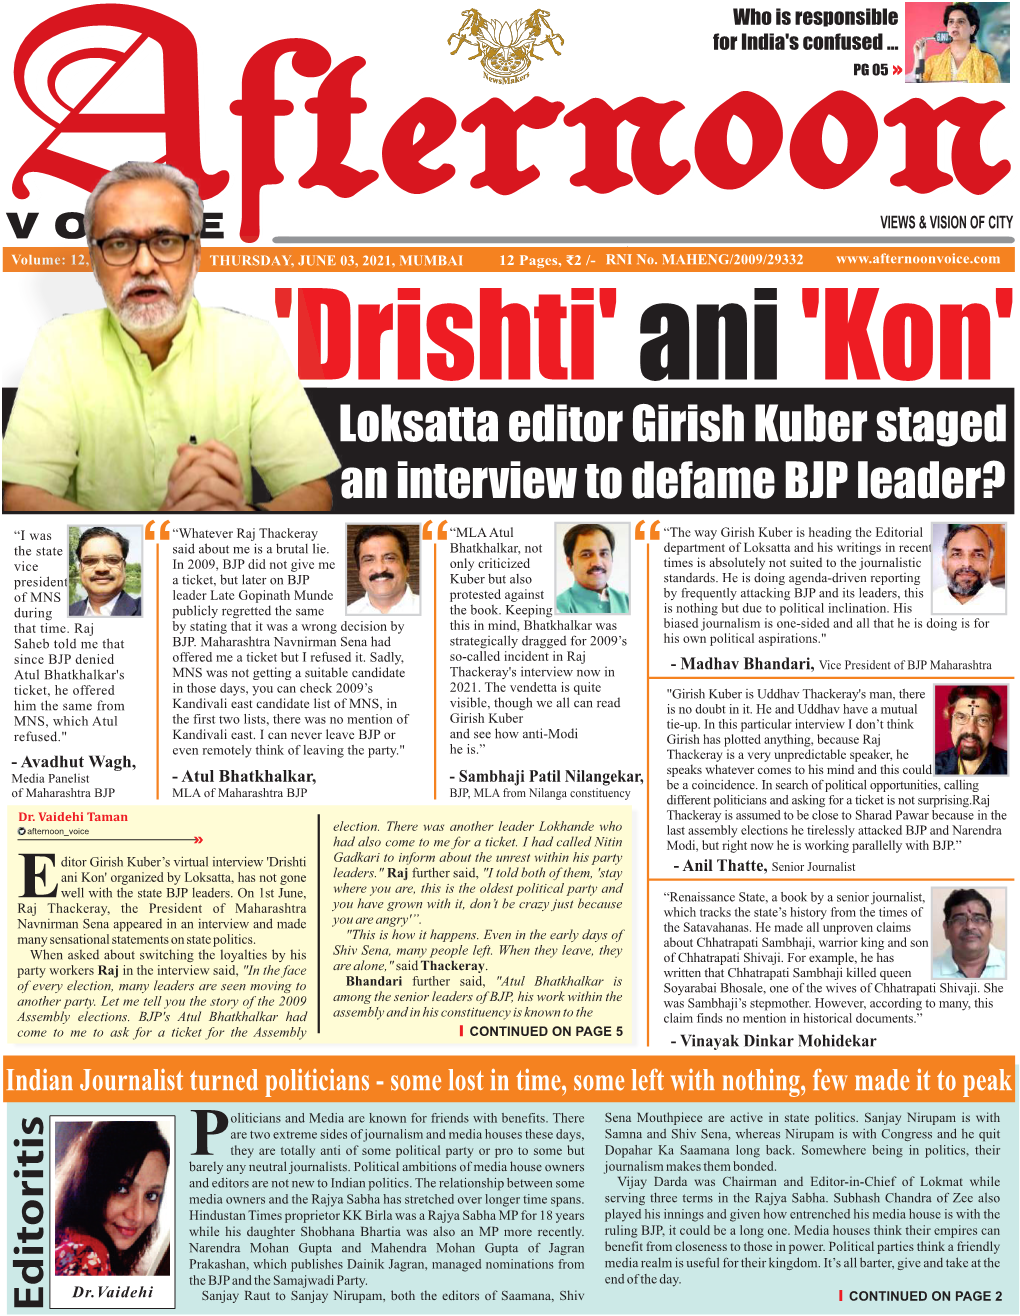 Loksatta Editor Girish Kuber Staged an Interview to Defame BJP Leader?